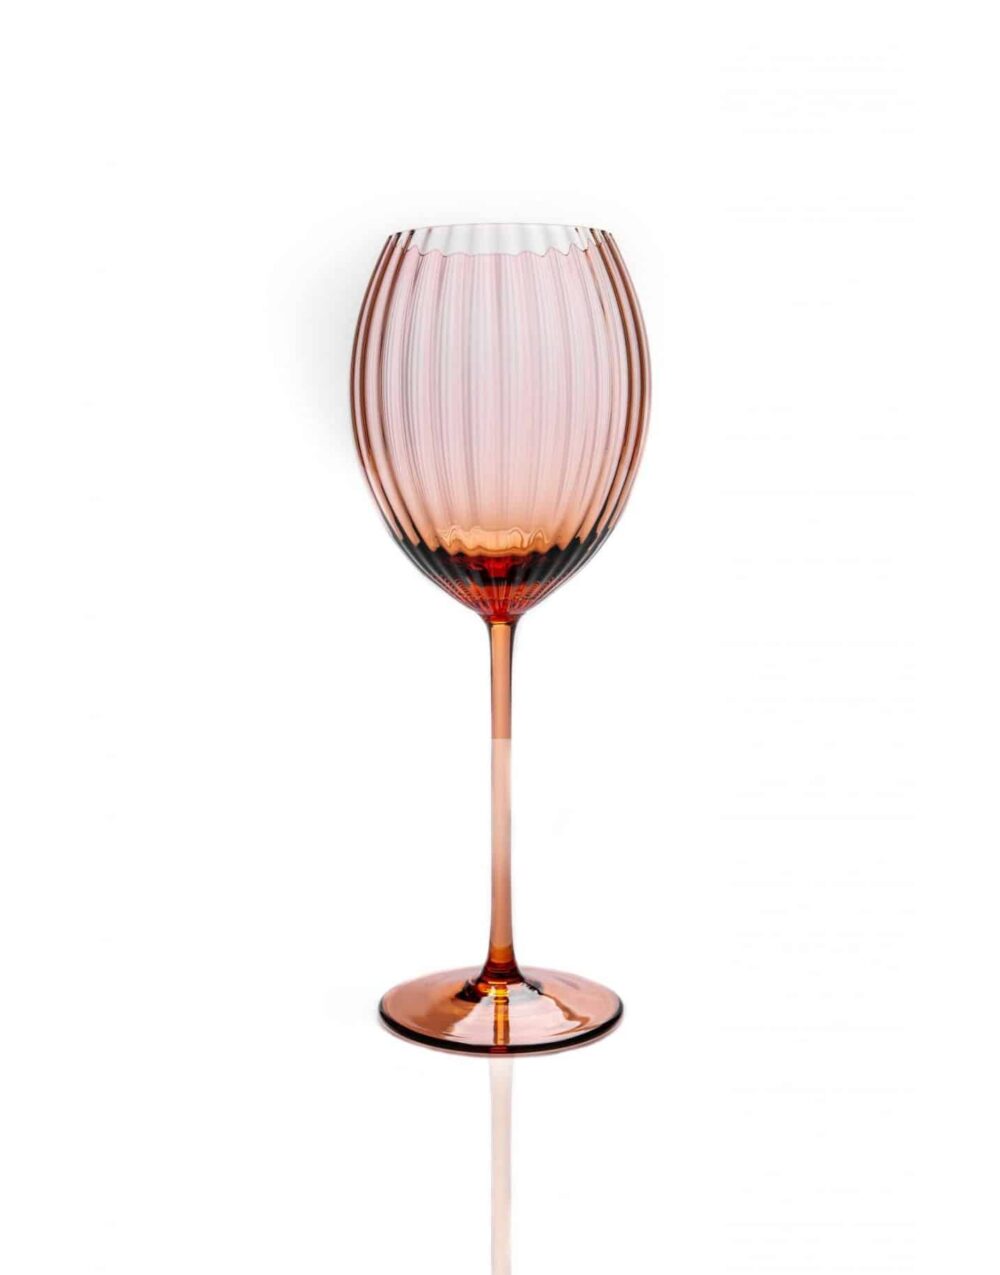 lyon oval wine glass, bronze brown wine glass, table setting, handblown glass, table setting, glass